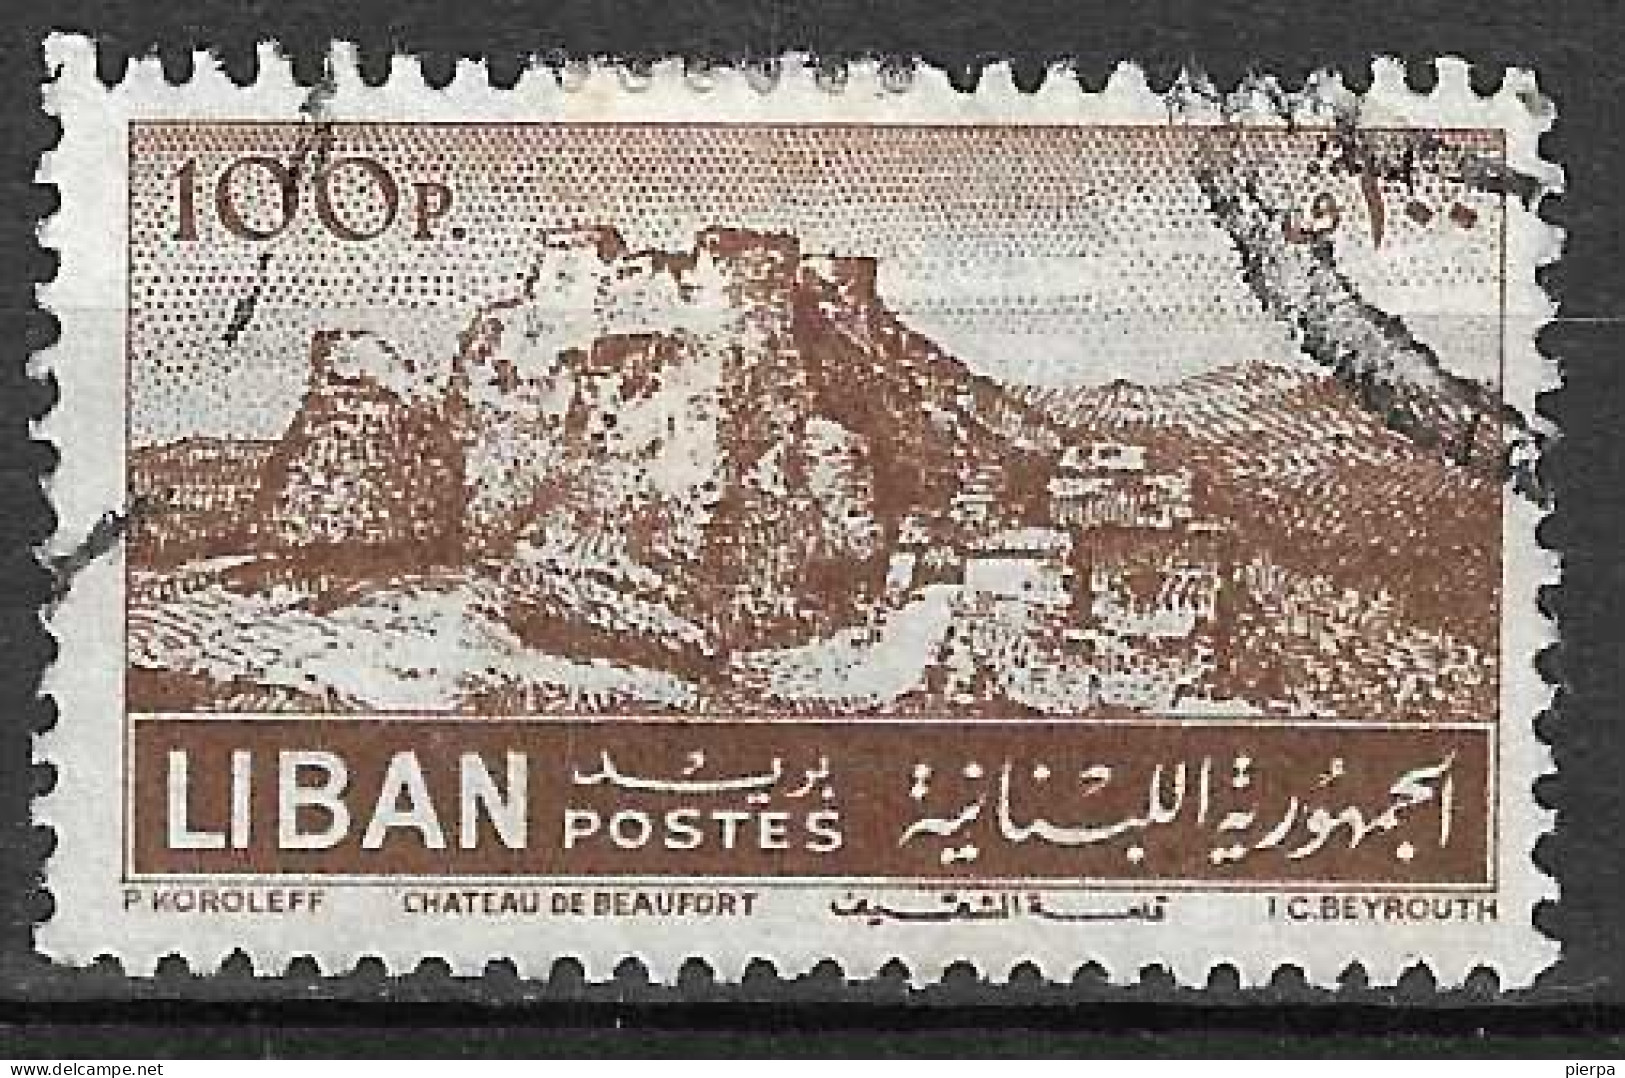 LIBANO - 1952 - BEAUFORT CASTLE - P. 100 - CANCELLED ( YVERT  87 - MICHEL 472) - Lebanon